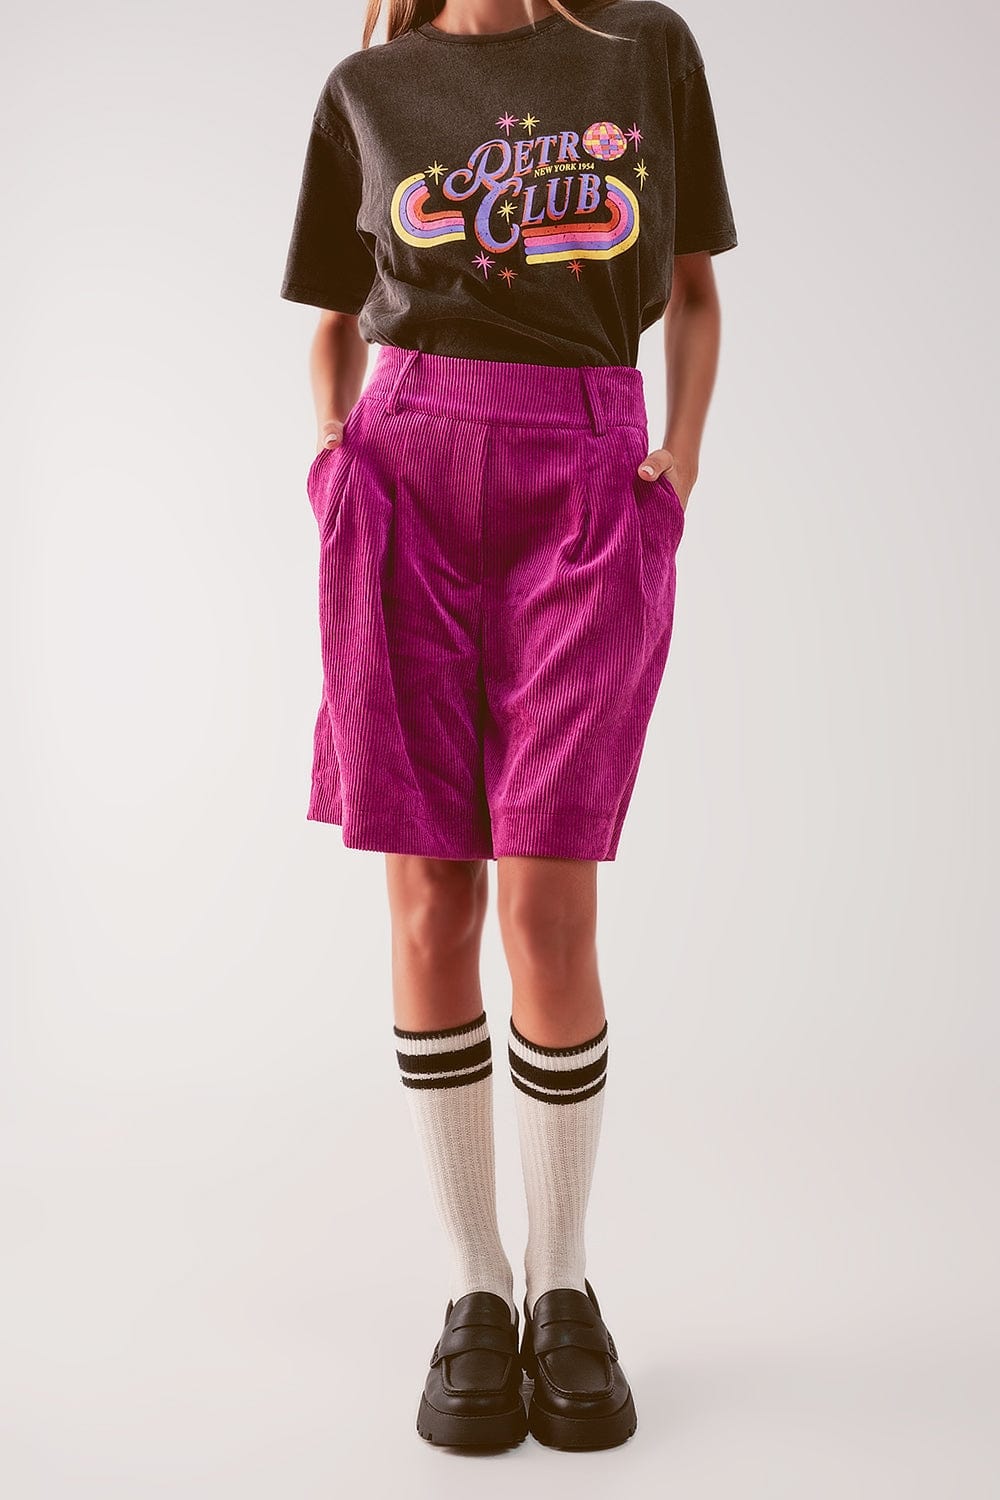 Q2 Women's Shorts Longline Short in Fuchsia Cord